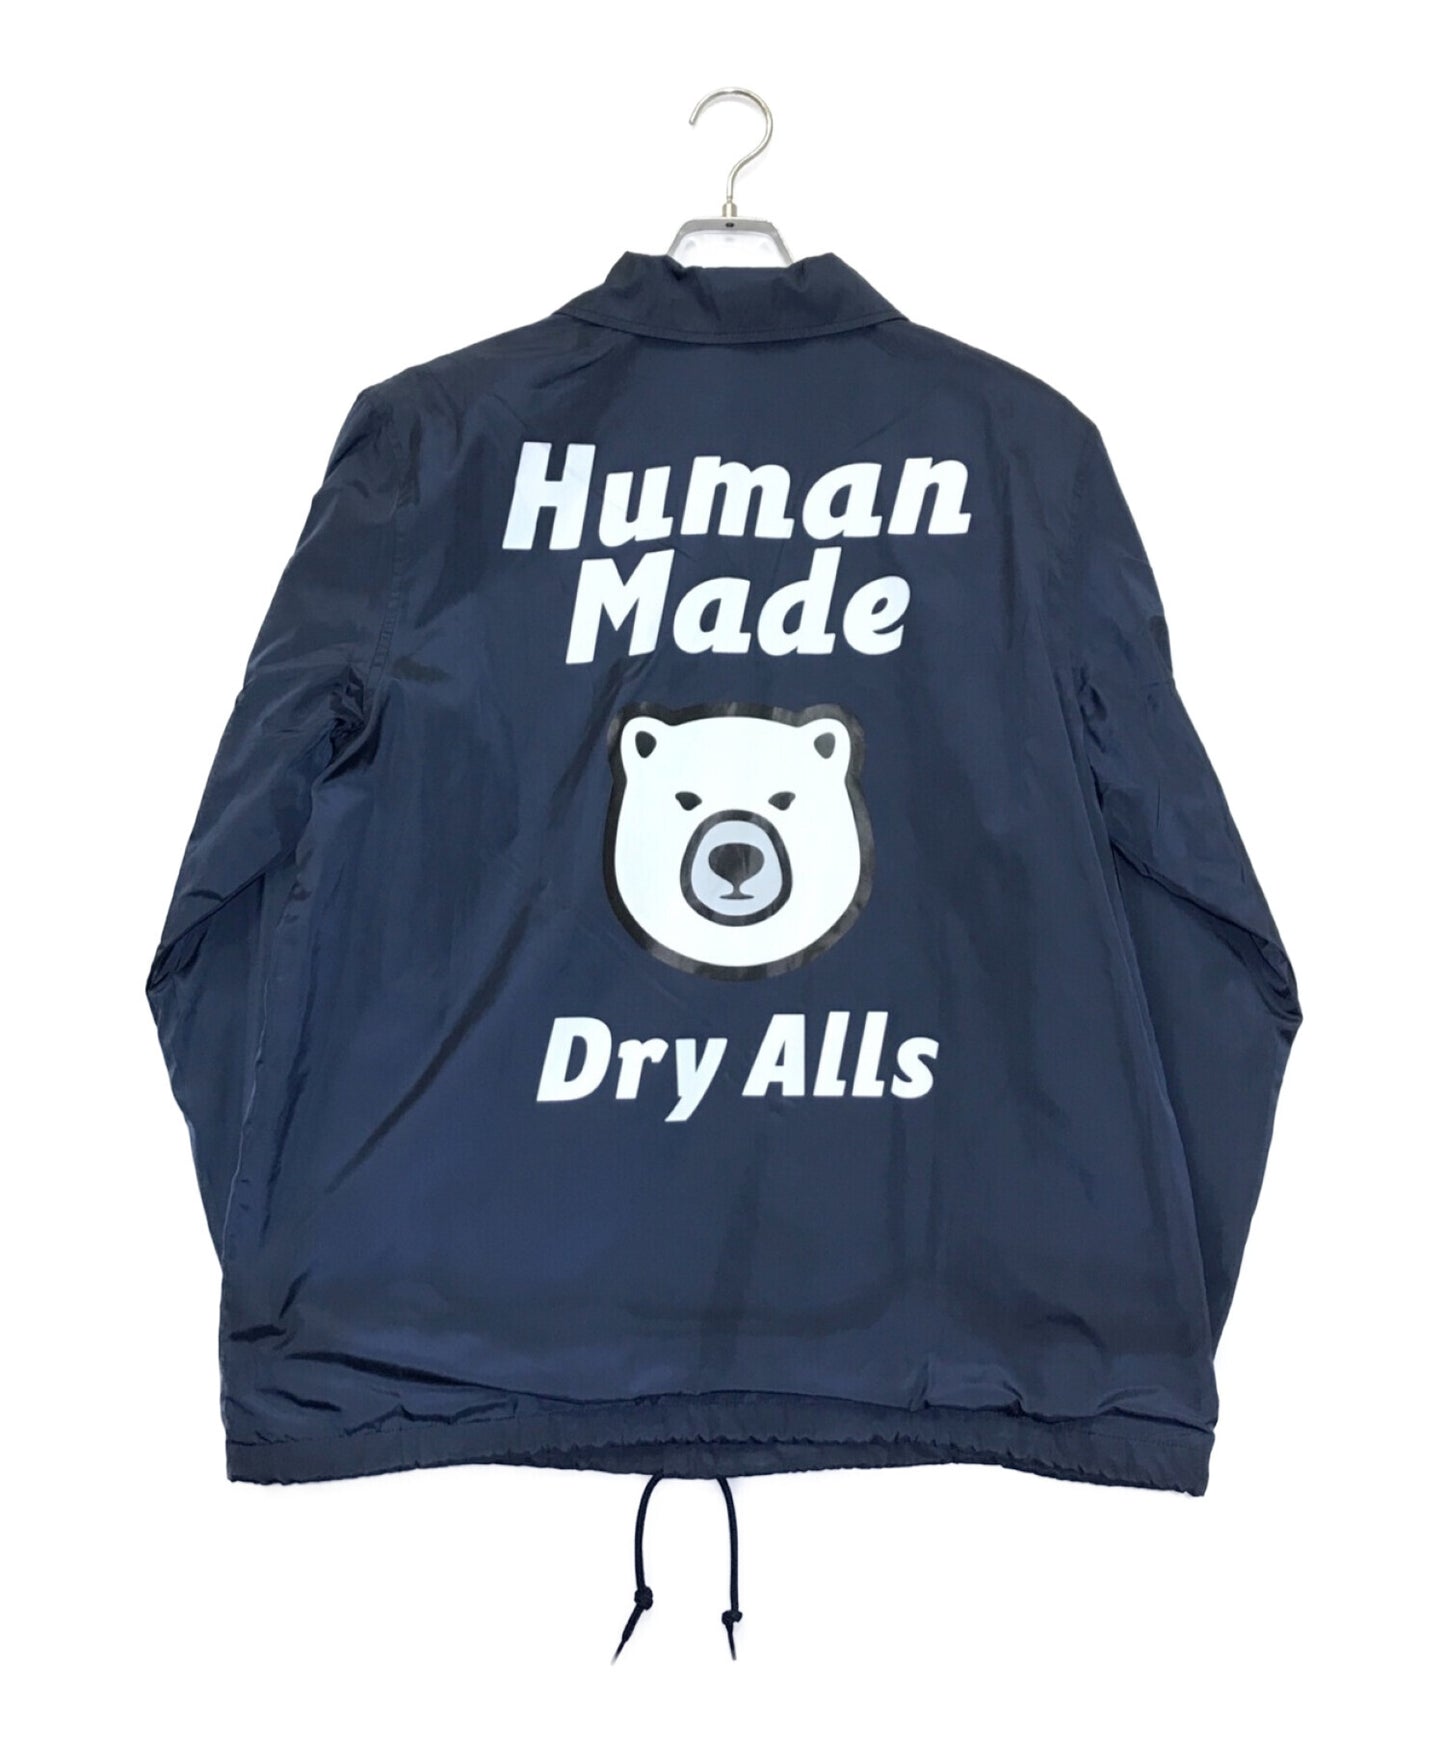 HUMAN MADE dry alls coach jacket coach jacket